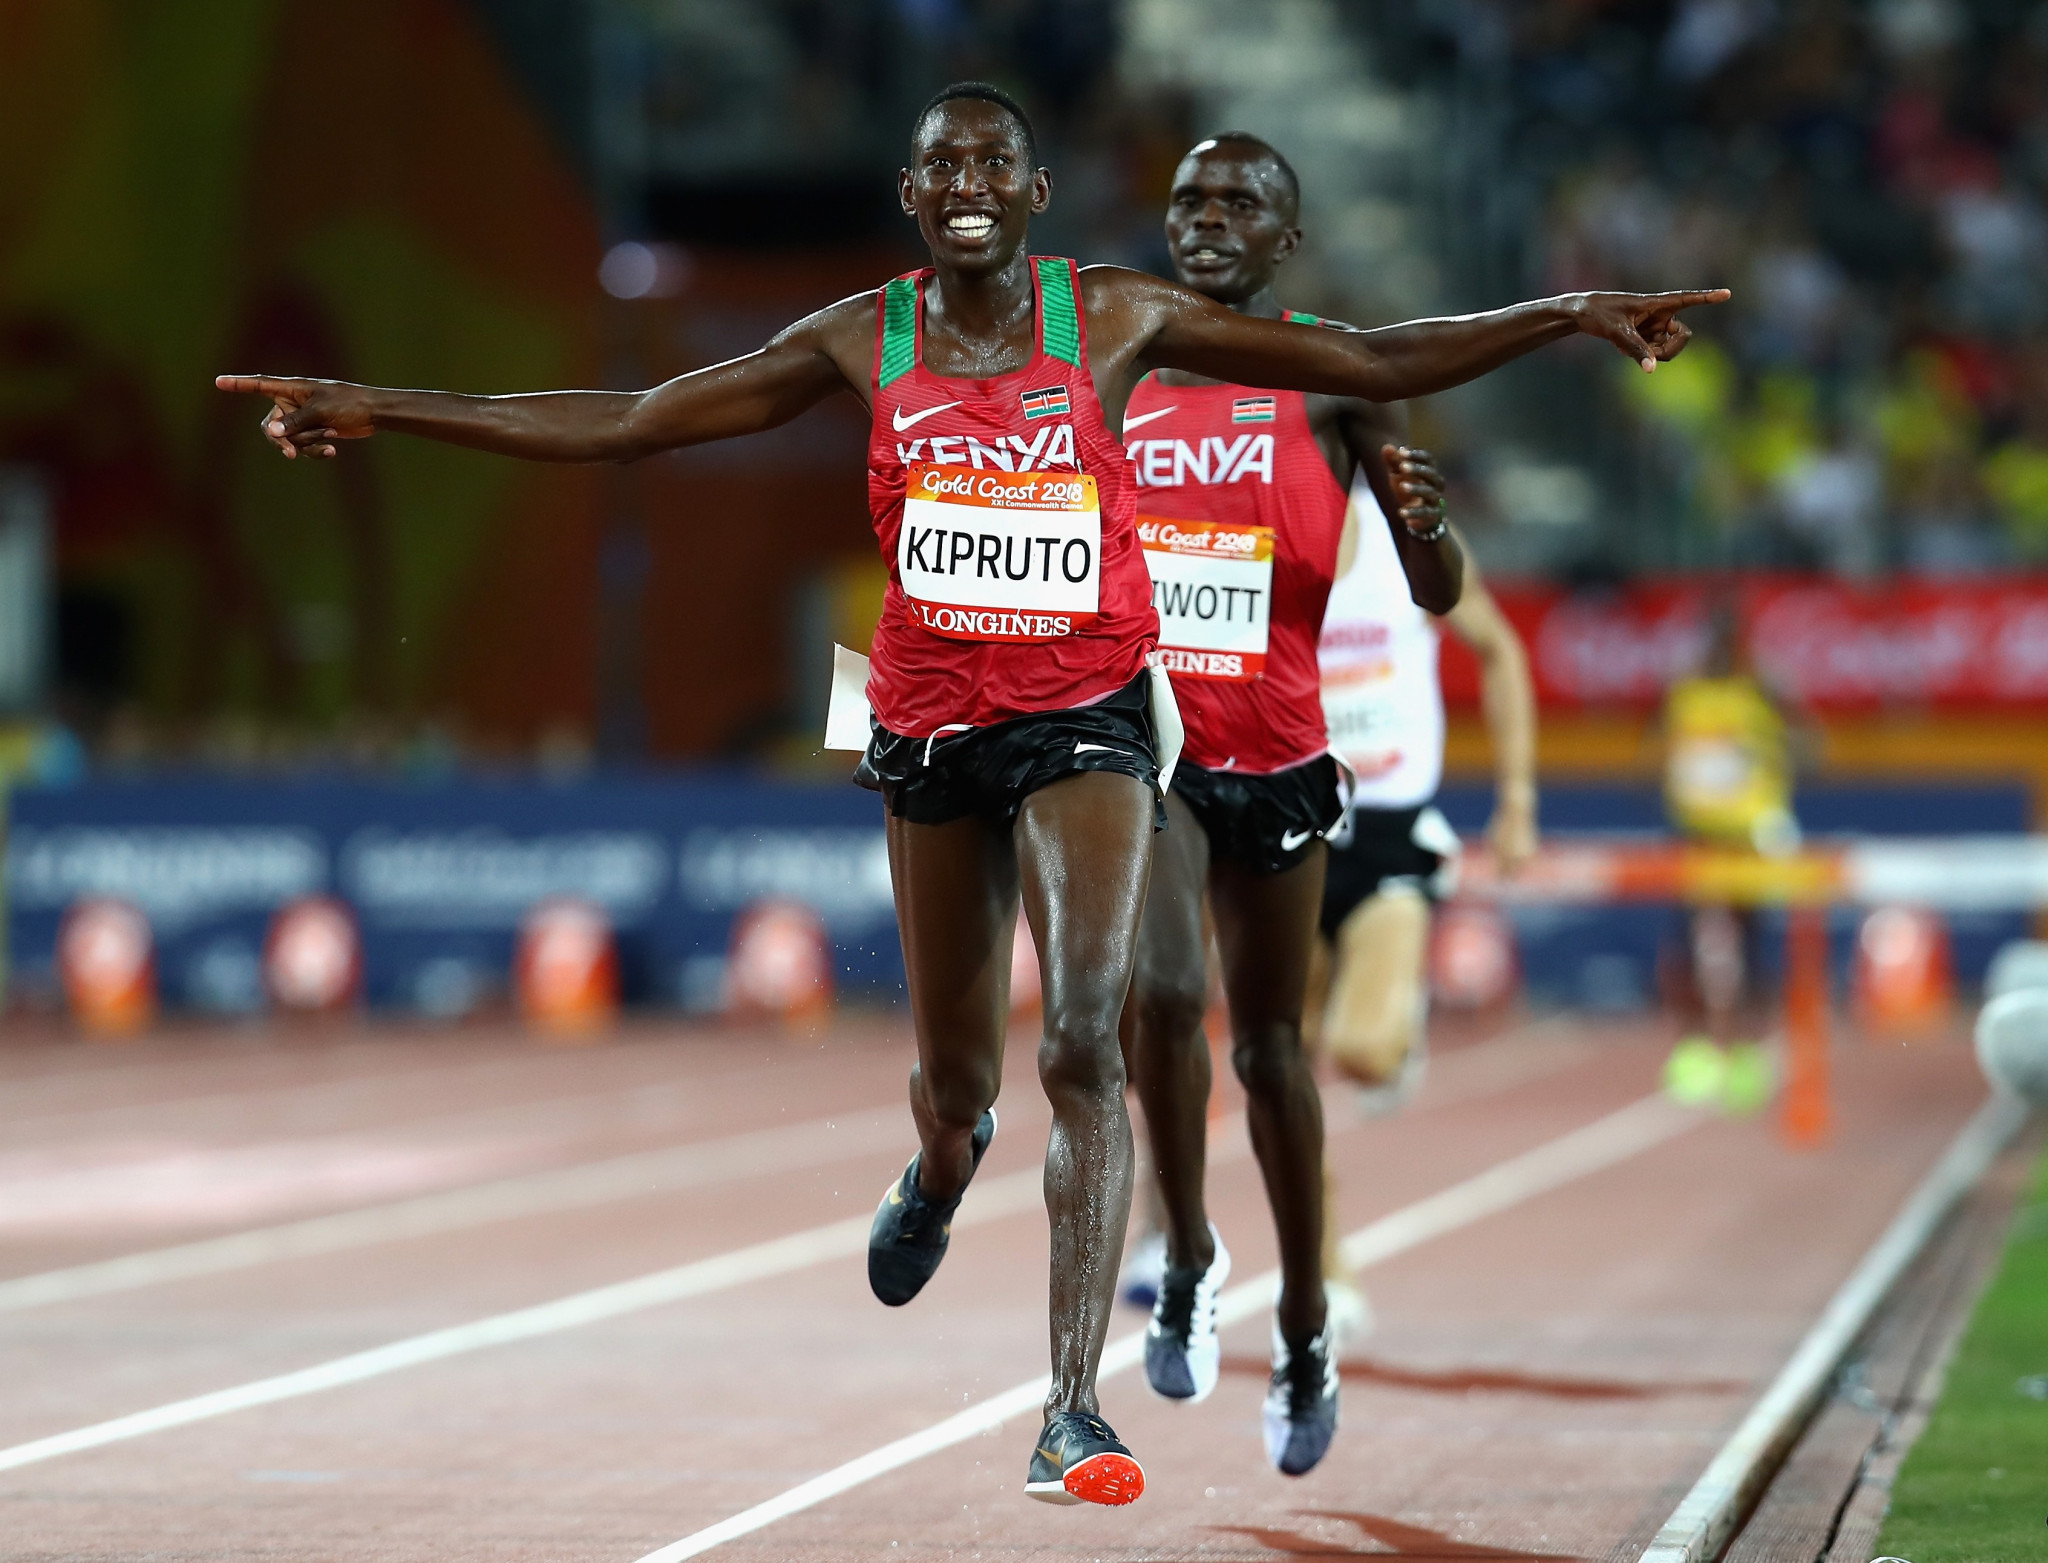 Conseslus Kipruto won the men's 3,000m steeplechase as Kenya swept the podium ©Getty Images